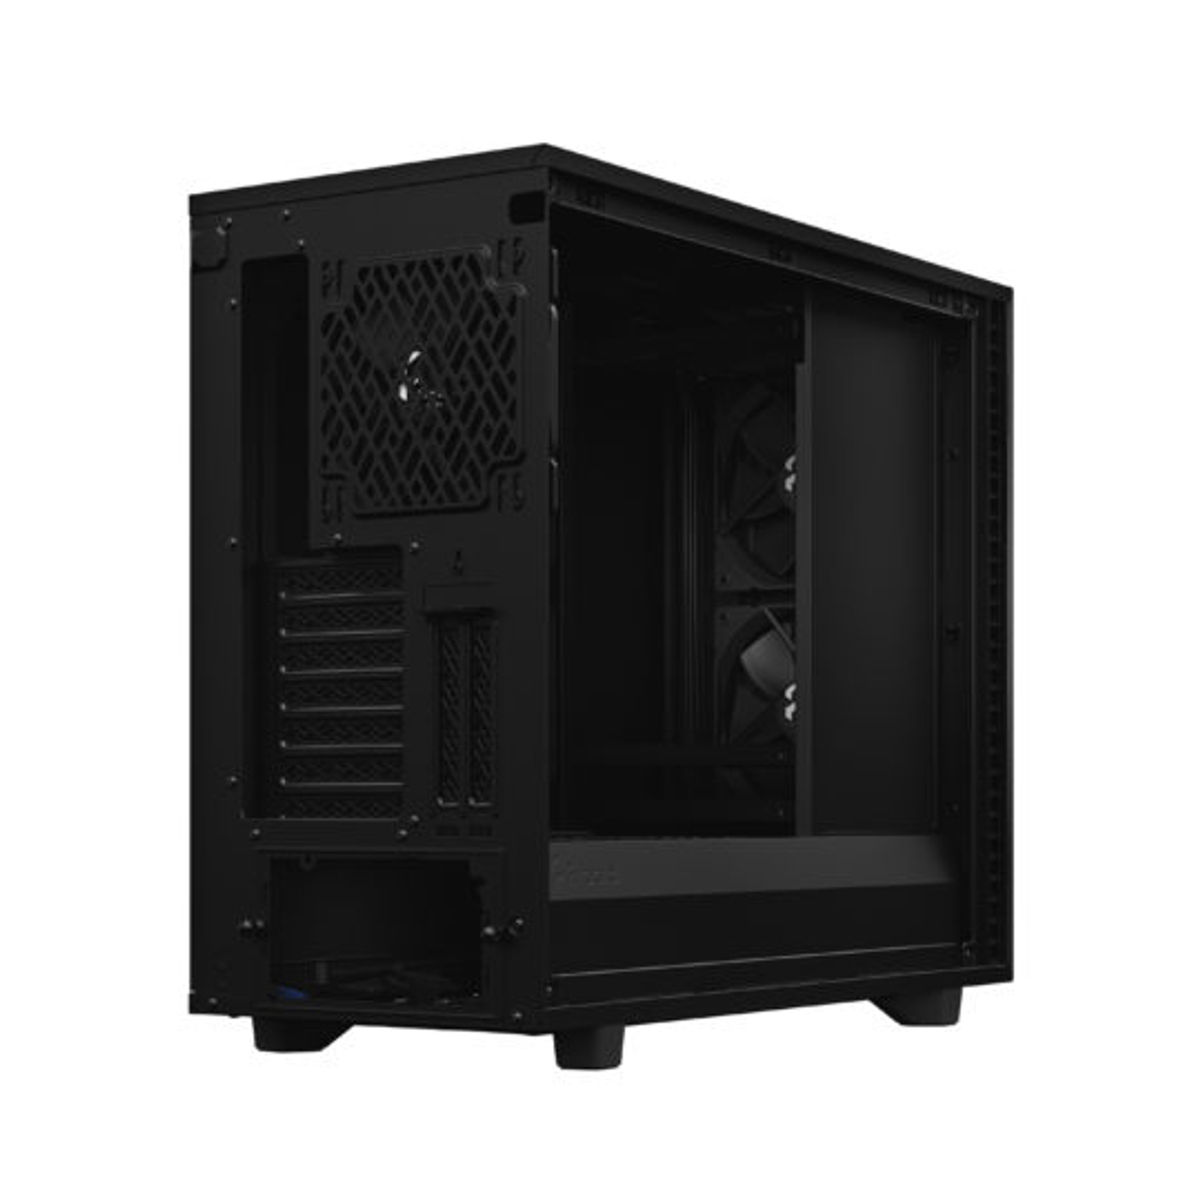 Case ATX Define 7 Black Solid